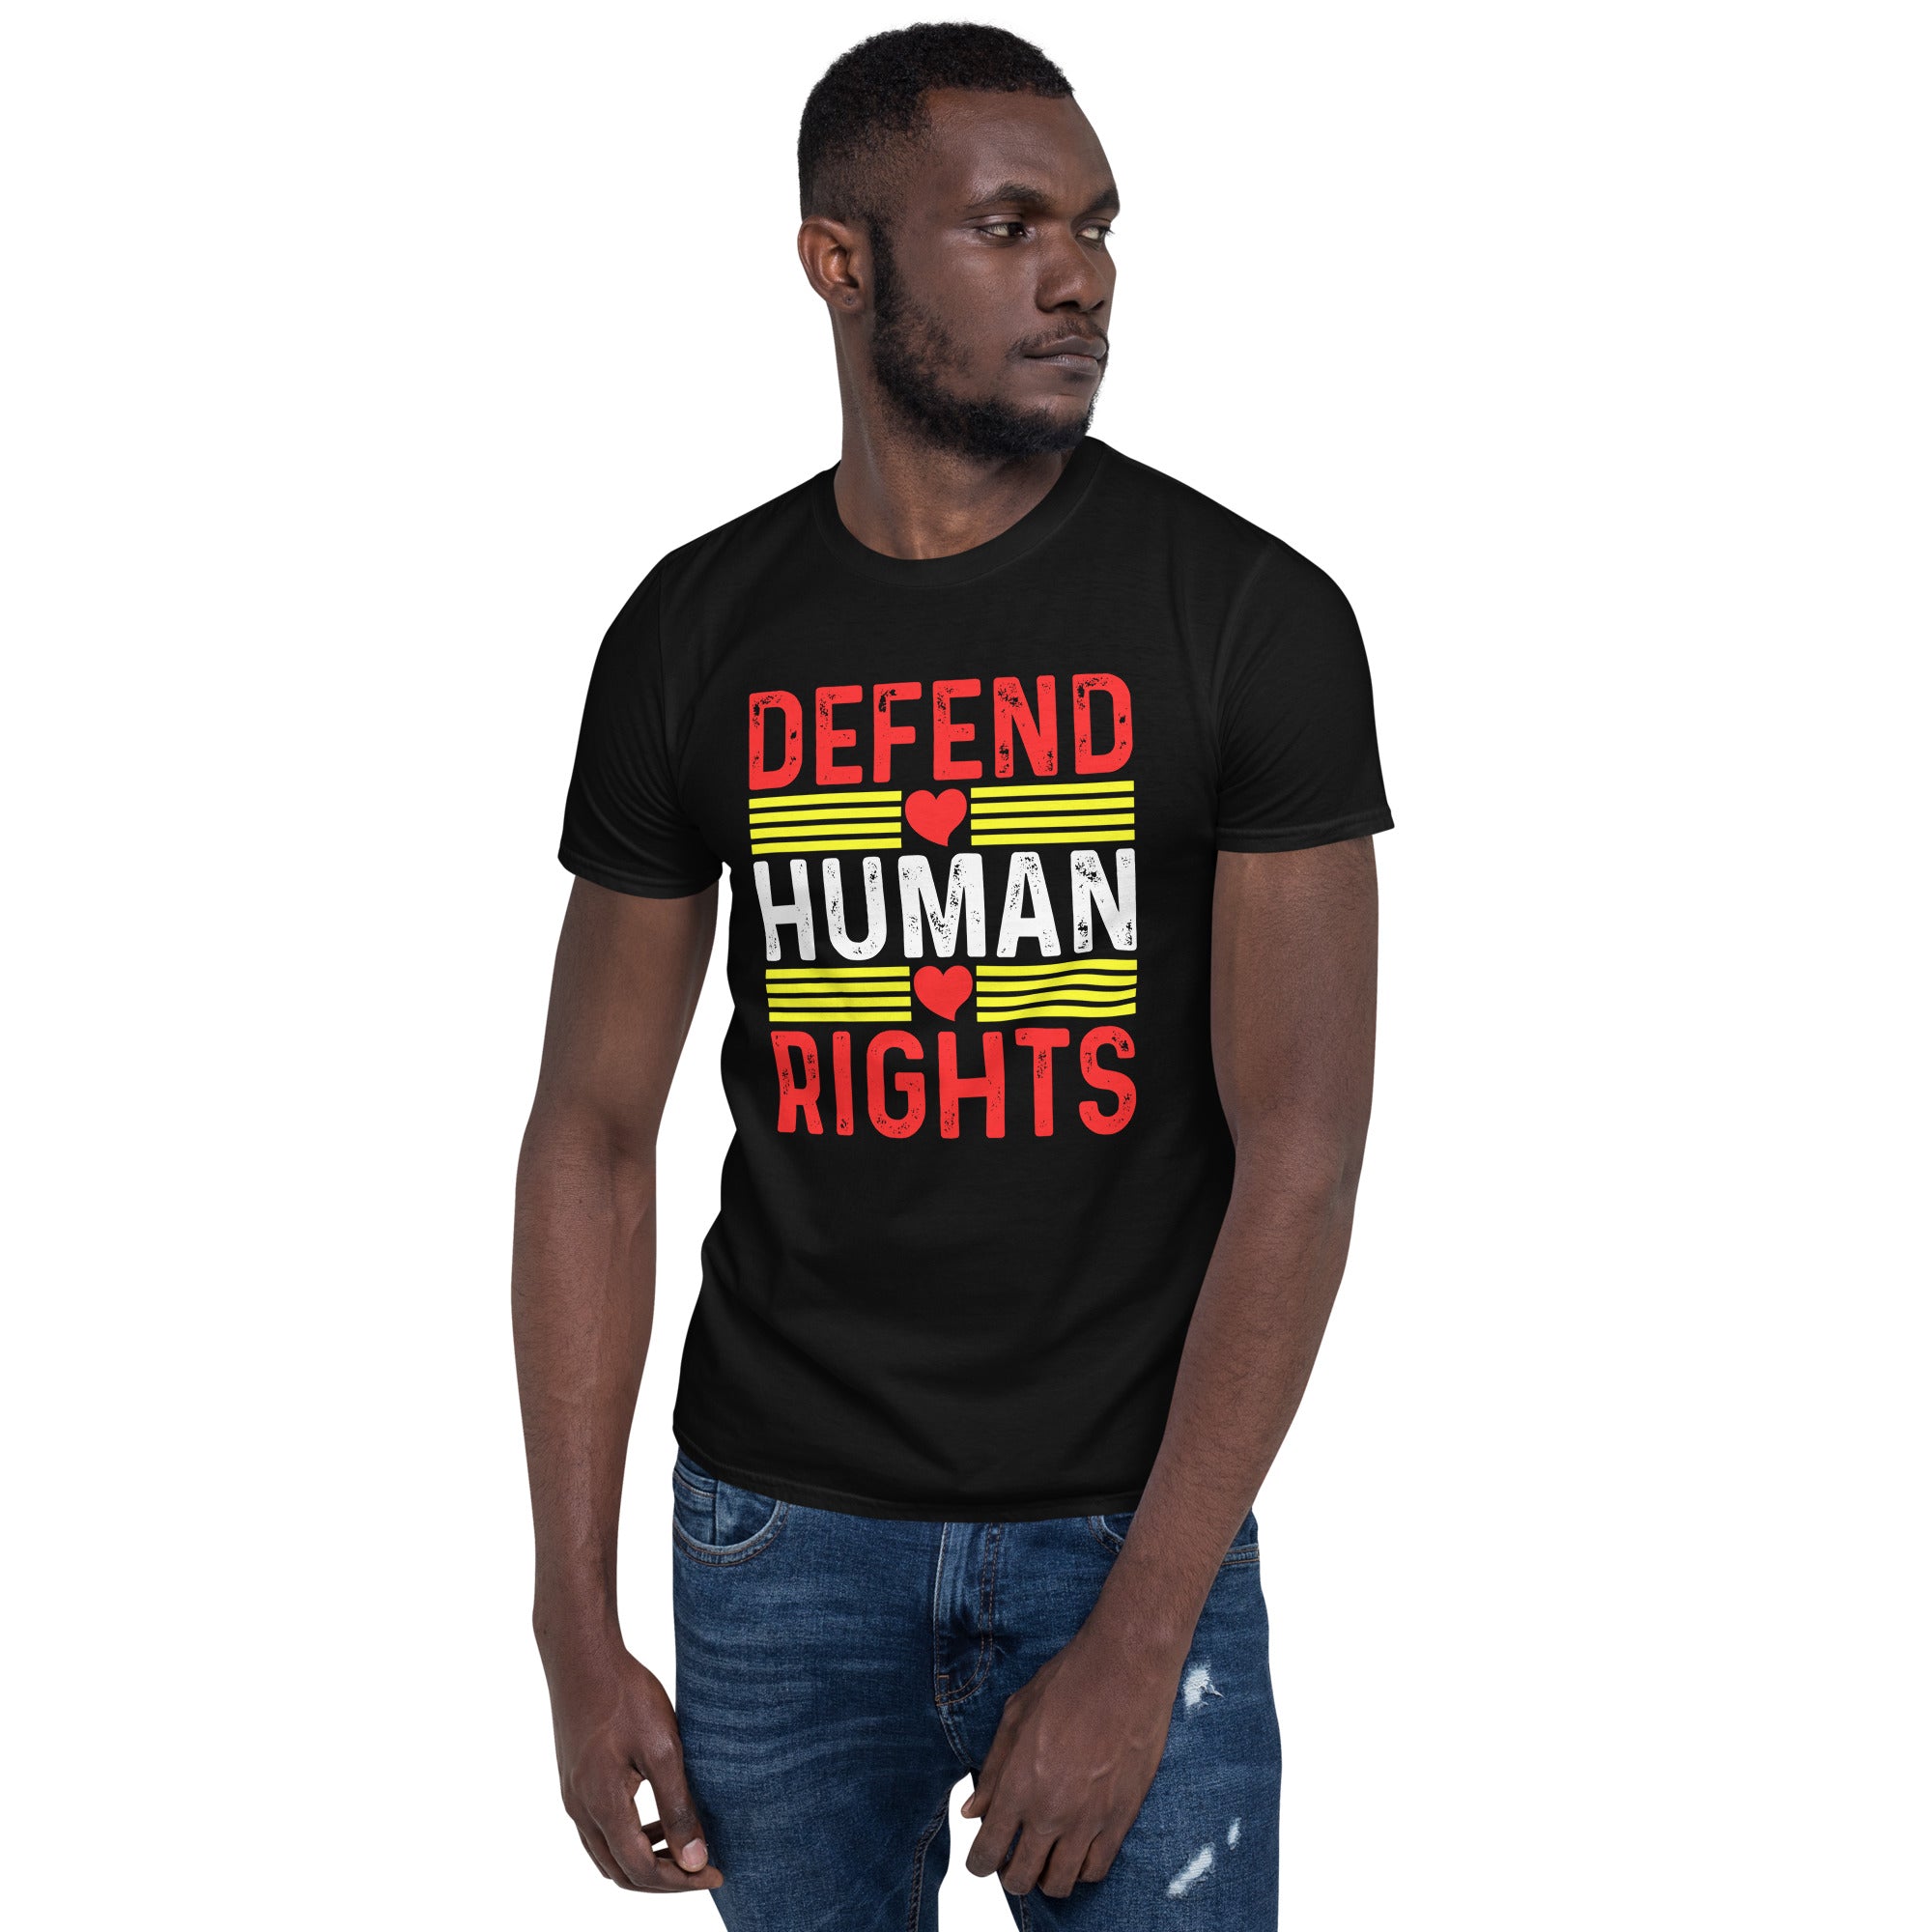 Defend Human Rights - Short-Sleeve Unisex T-Shirt